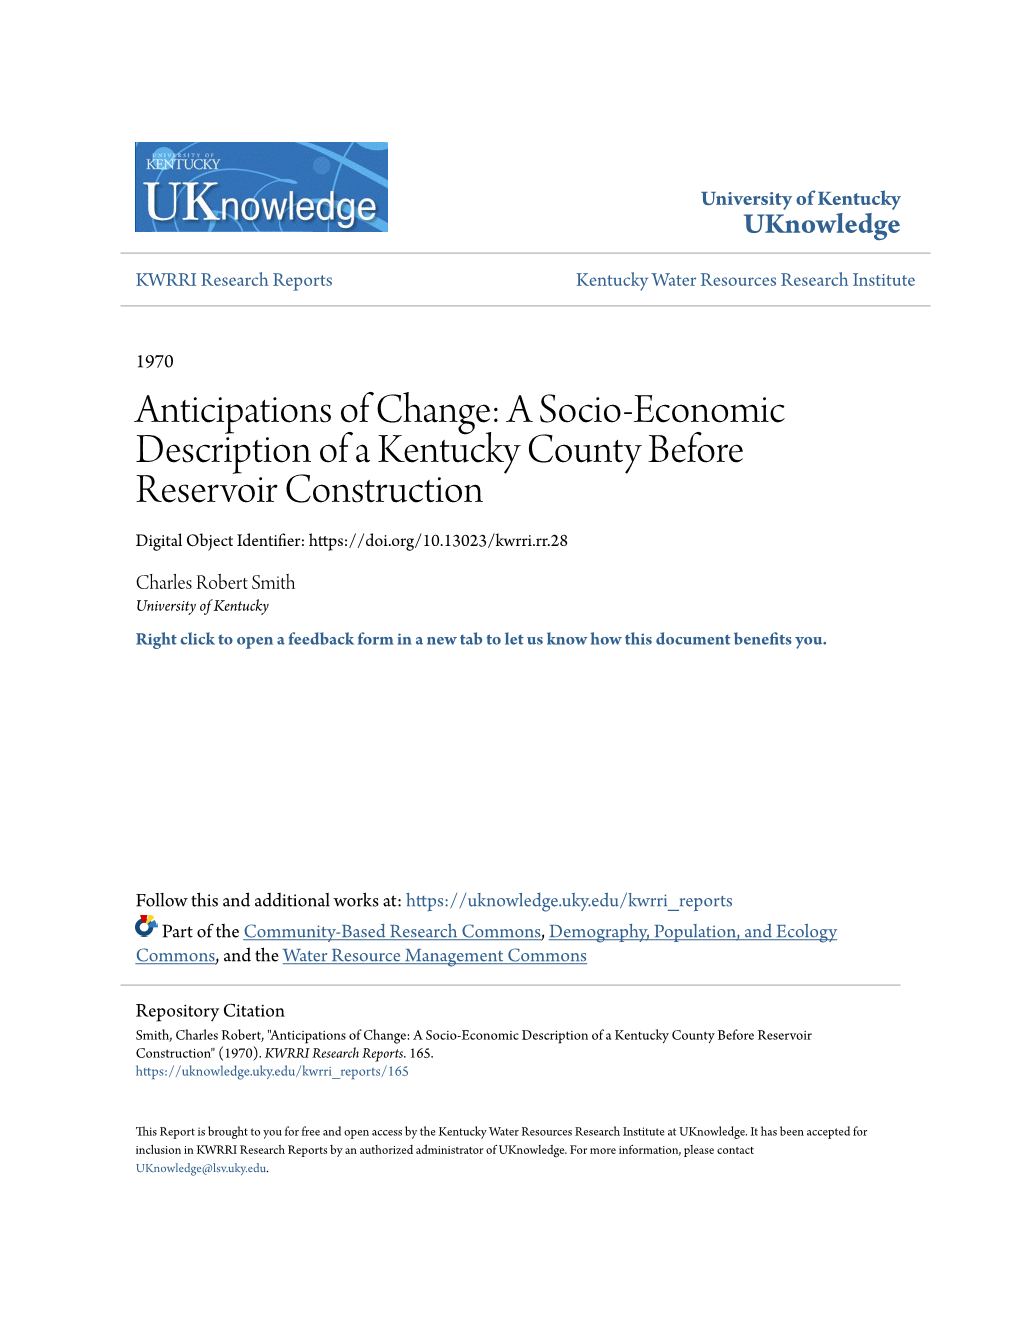 A Socio-Economic Description of a Kentucky County Before Reservoir Construction Digital Object Identifier